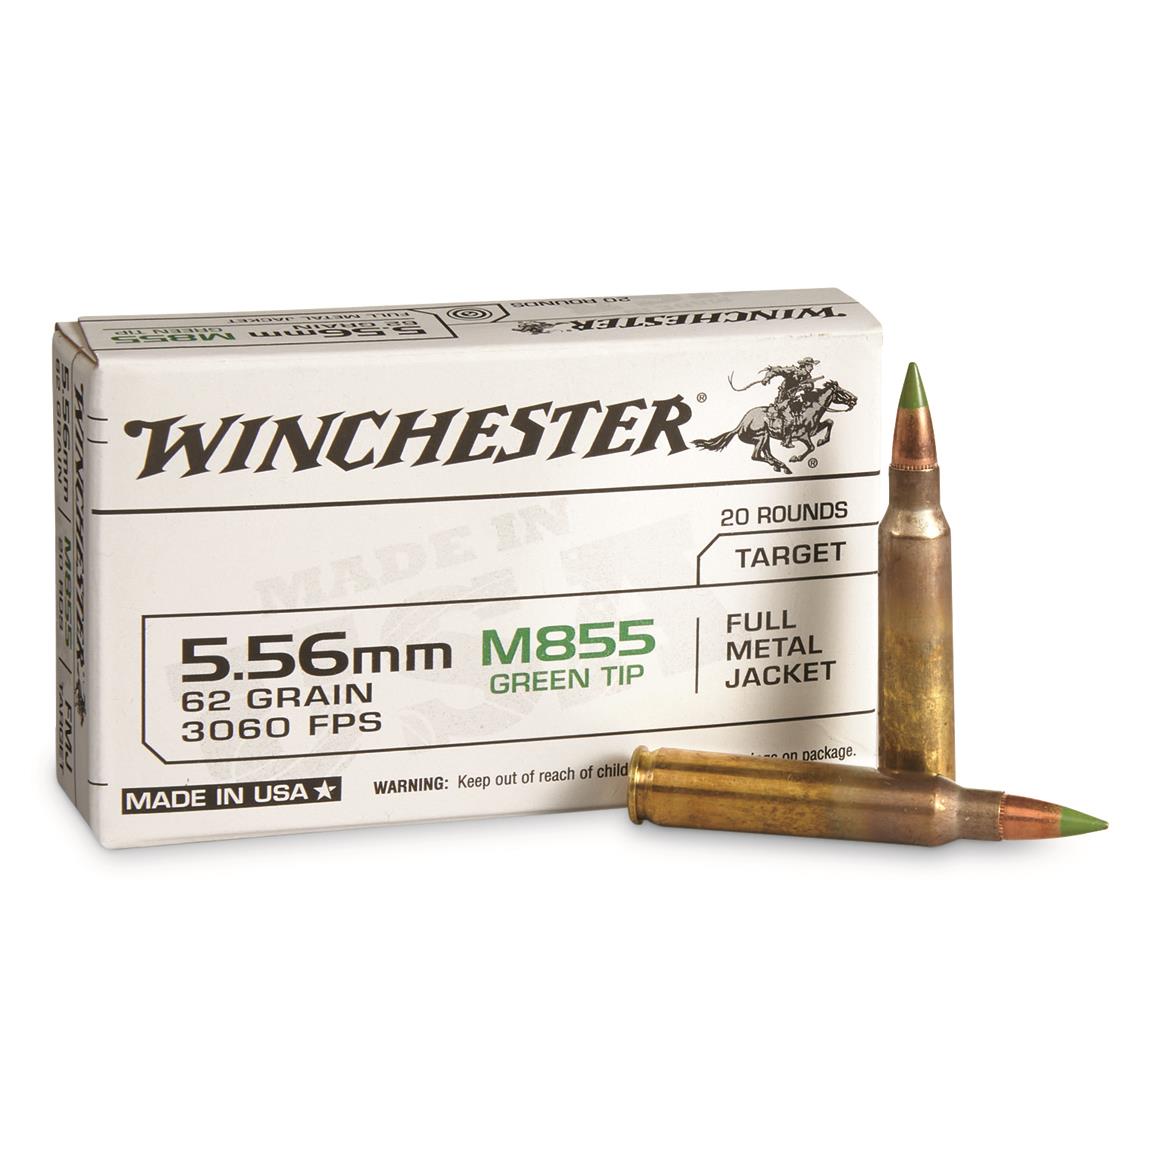 Winchester White Box, 5.56x45mm NATO, M855 "Green Tip", 62 Grain, 20 Rounds